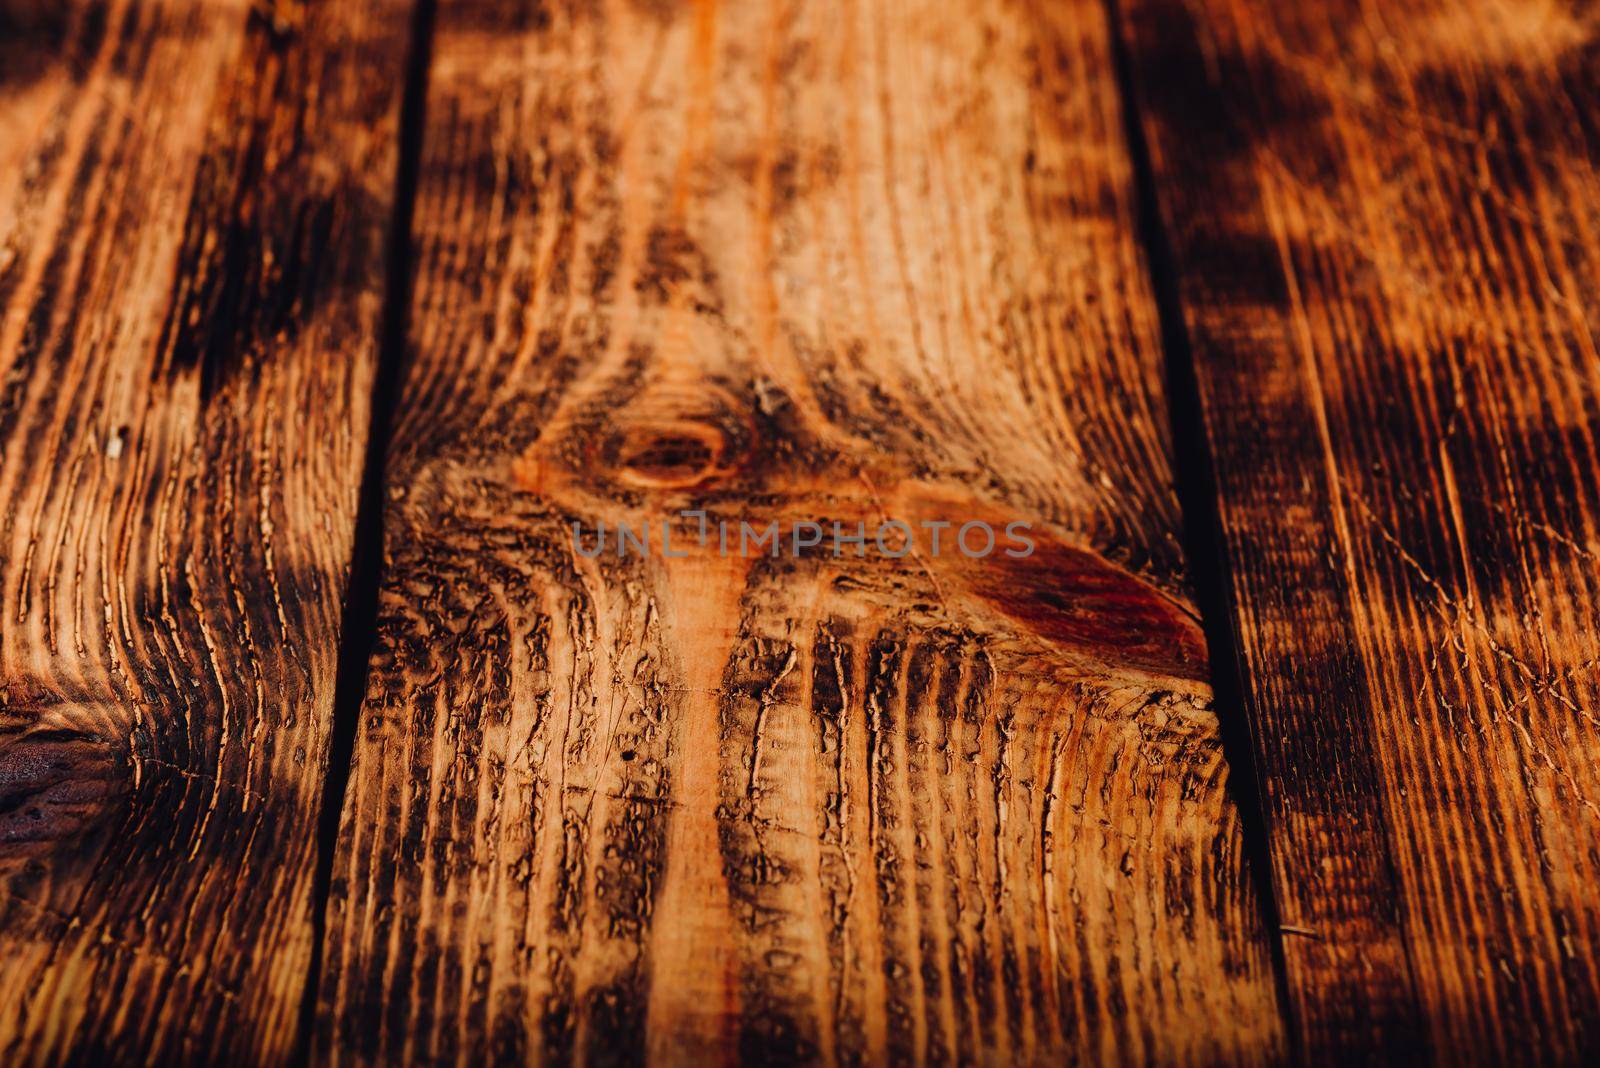 Old wooden surface by Seva_blsv